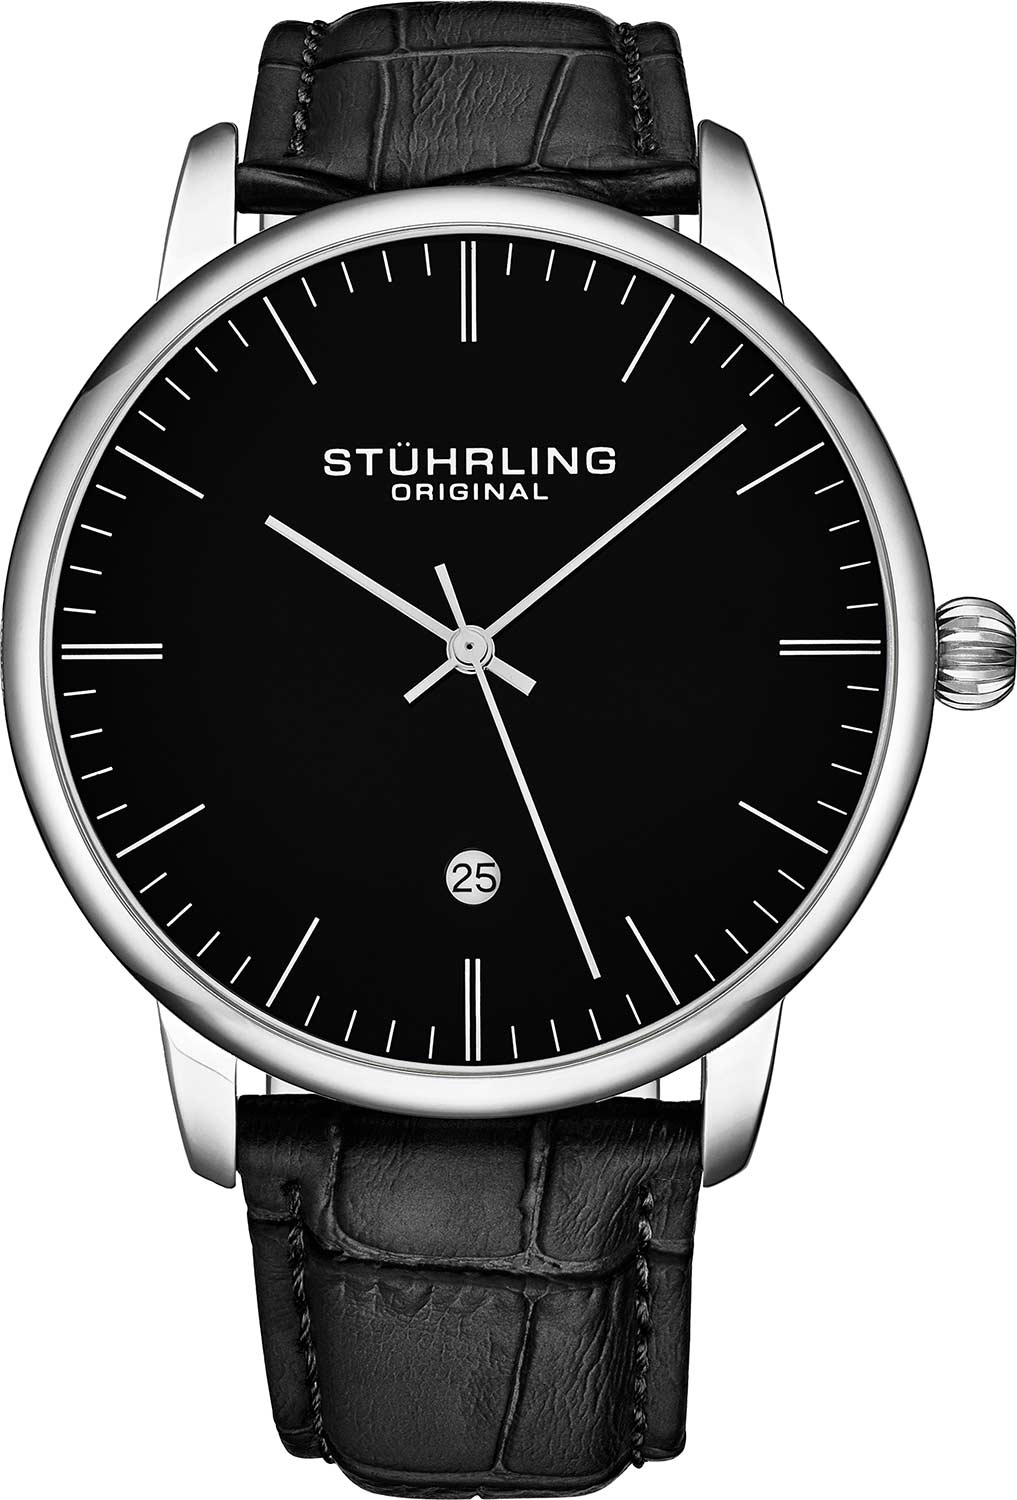   Stuhrling 3997XL.2